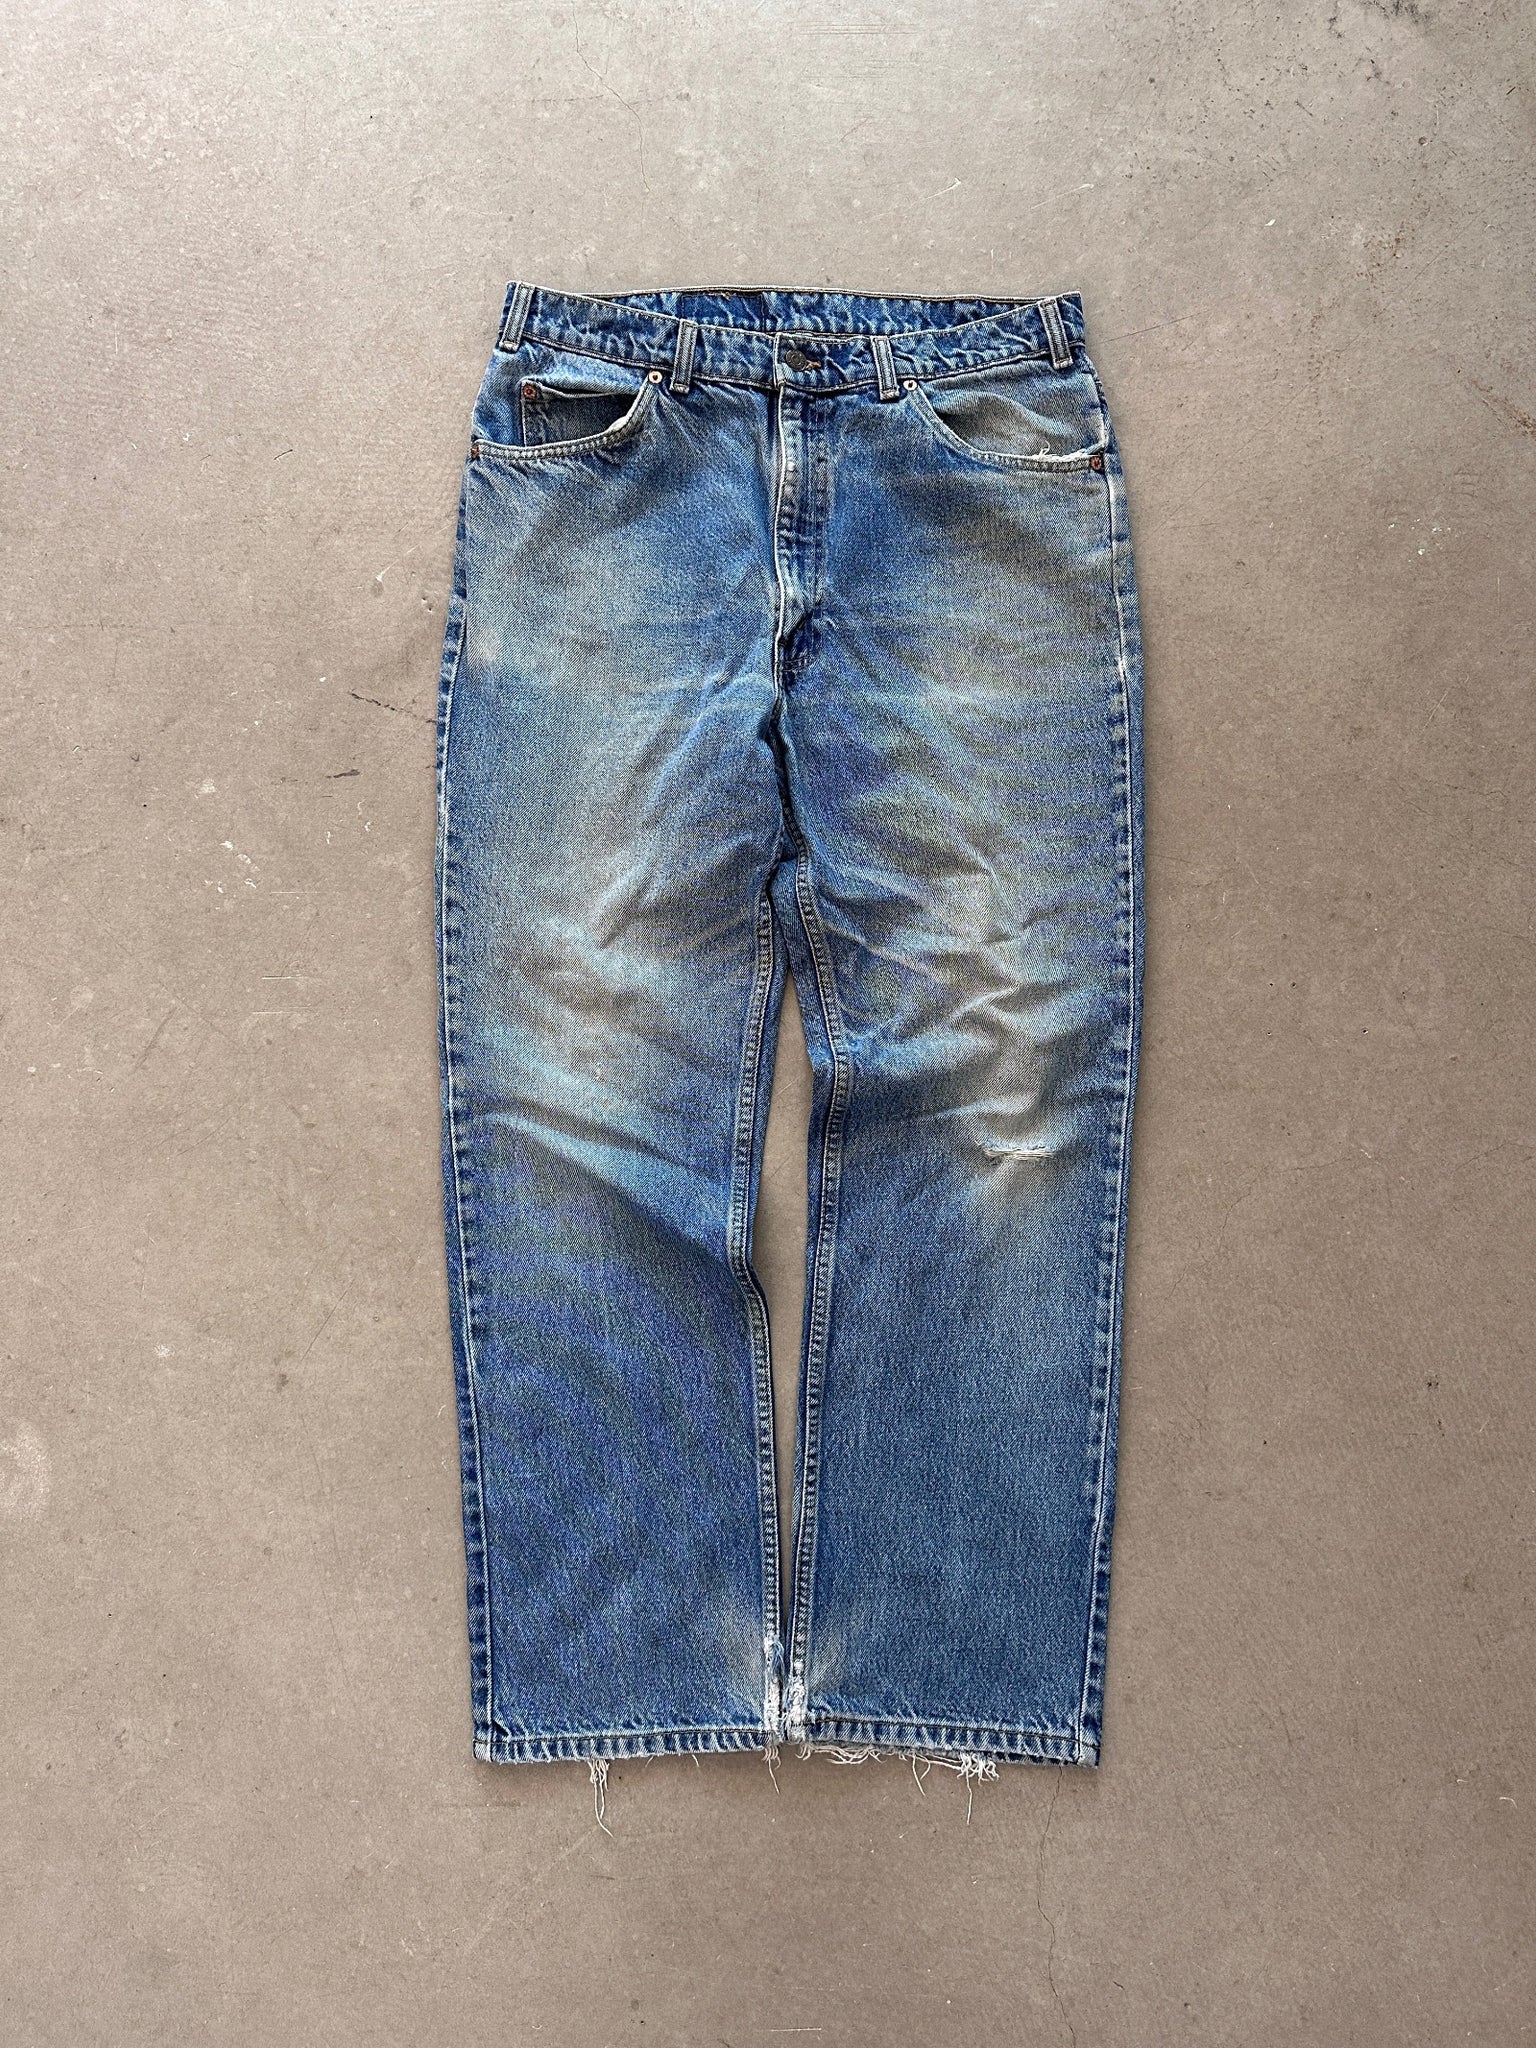 1980's Levi's 619 Orange Tab Jeans - 36 x 30